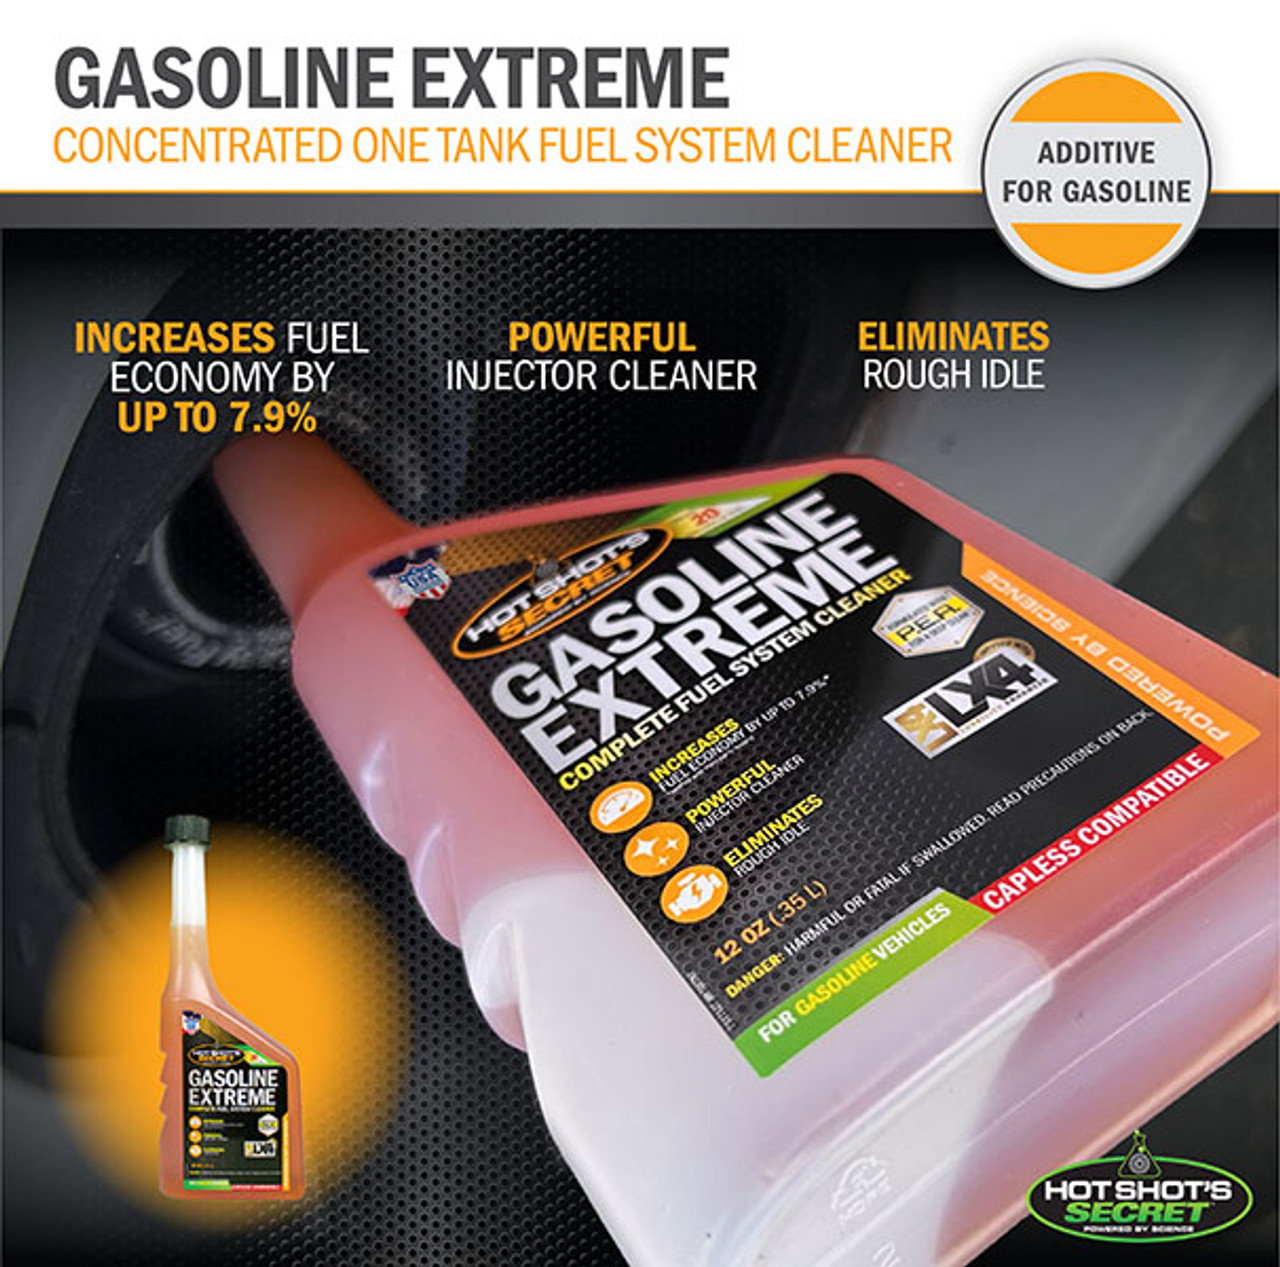 GASOLINE EXTREME Complete Fuel System Cleaner by Hot Shot's Secret